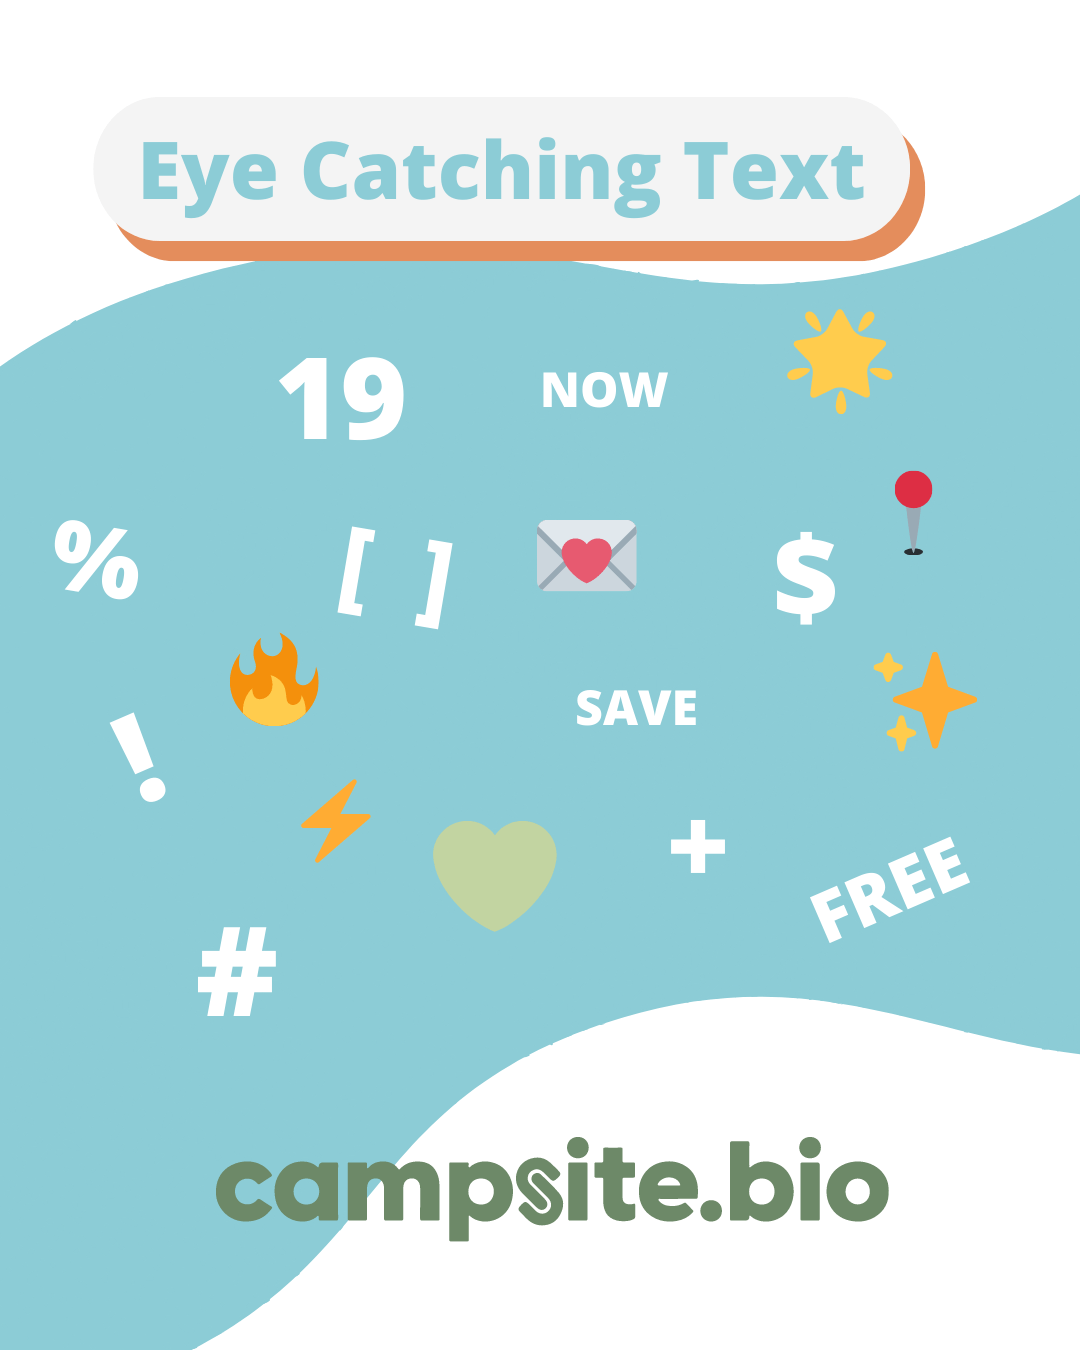 eye catching link label text Campsite.bio